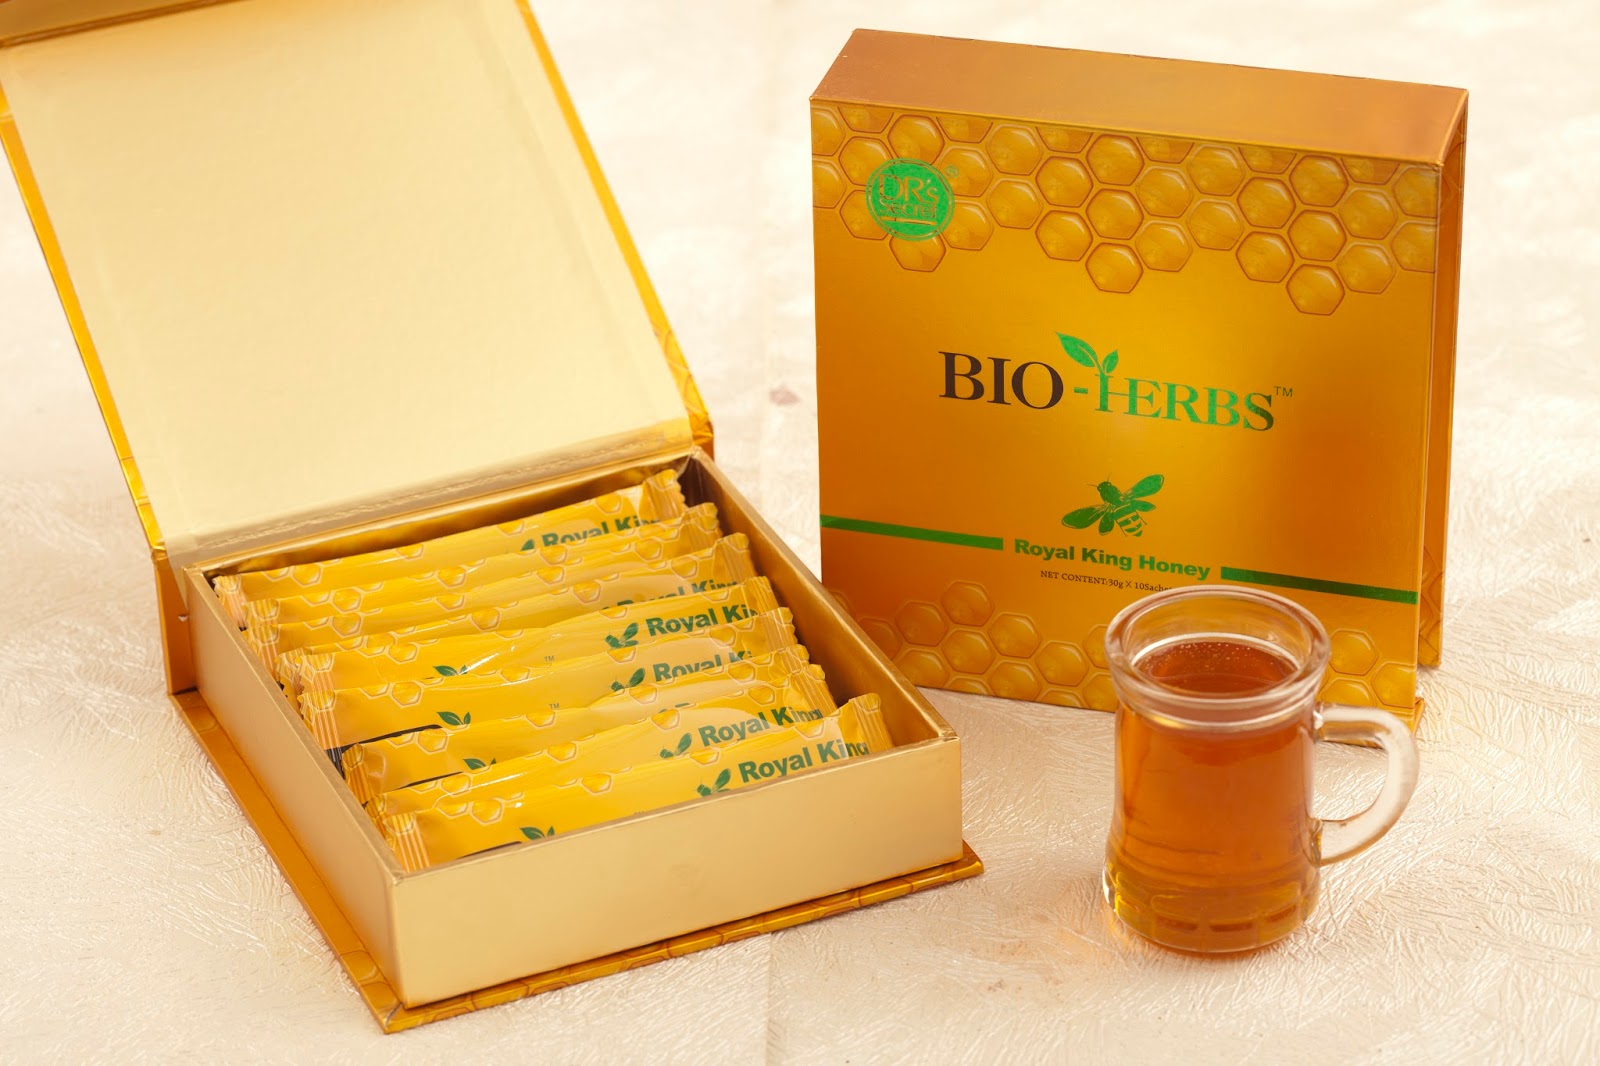 Royal honey. Bio Herbs Royal King Honey. Био Херб Королевский мед. Королевский мёд Royal Honey для мужчин. Royal Honey для мужчин Малайзия.